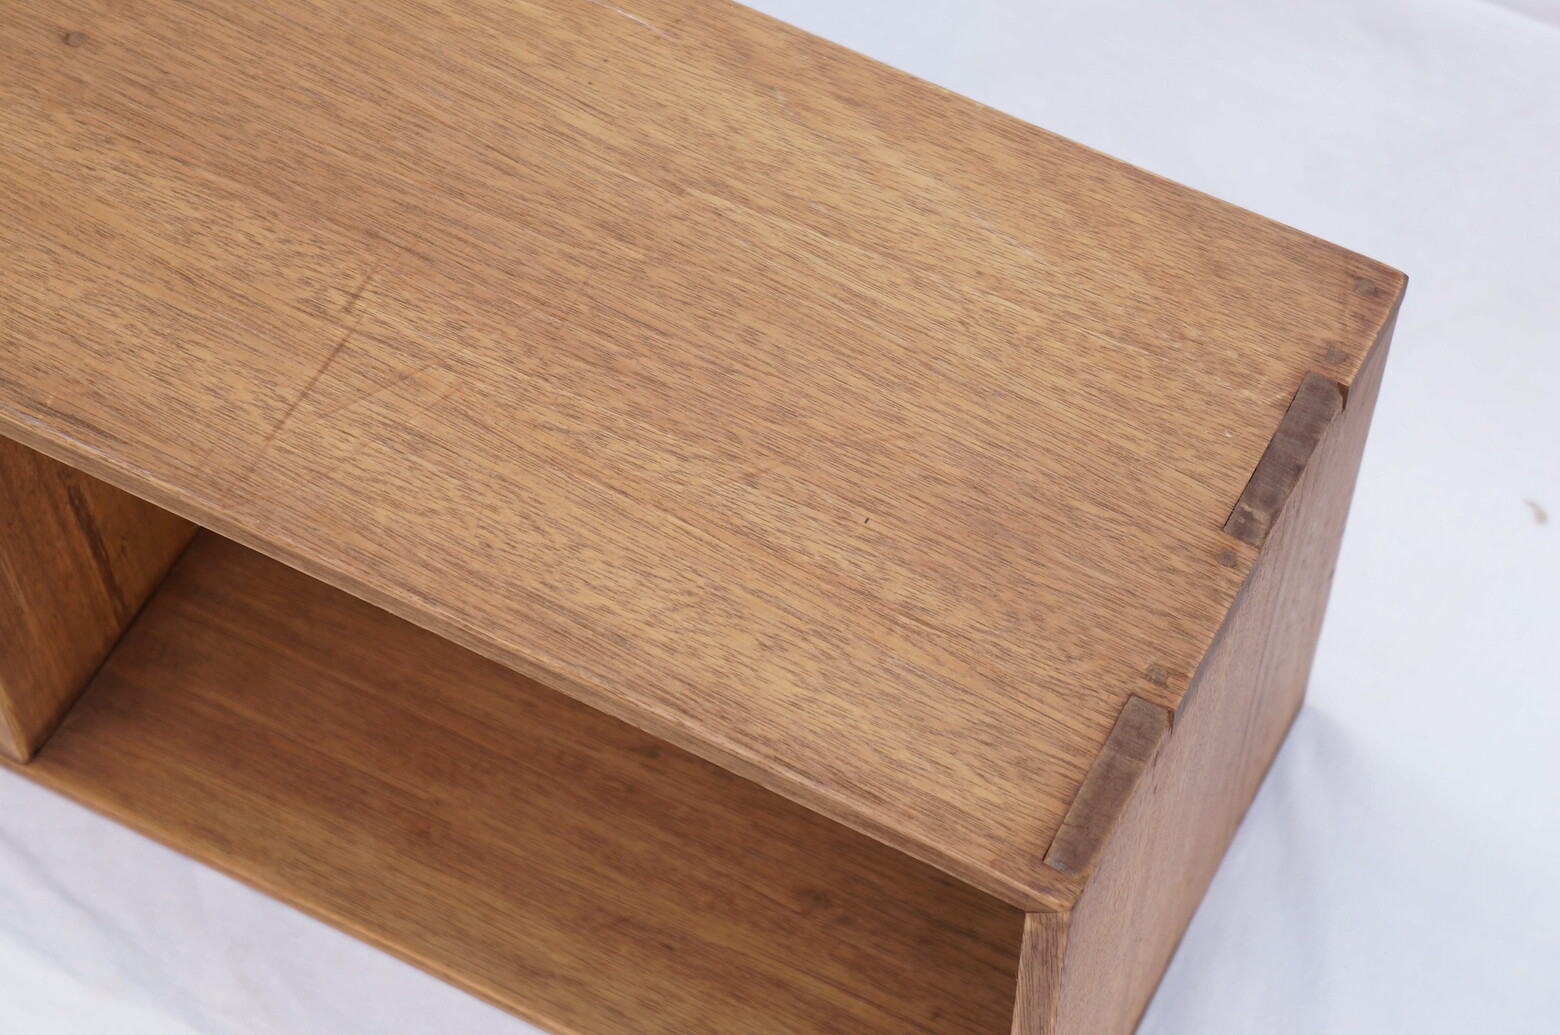 Japanese Vintage Wooden Box Shelf/ジャパンヴィンテージ ボックスシェルフ 木箱 収納ボックス レトロ シャビー 小 6